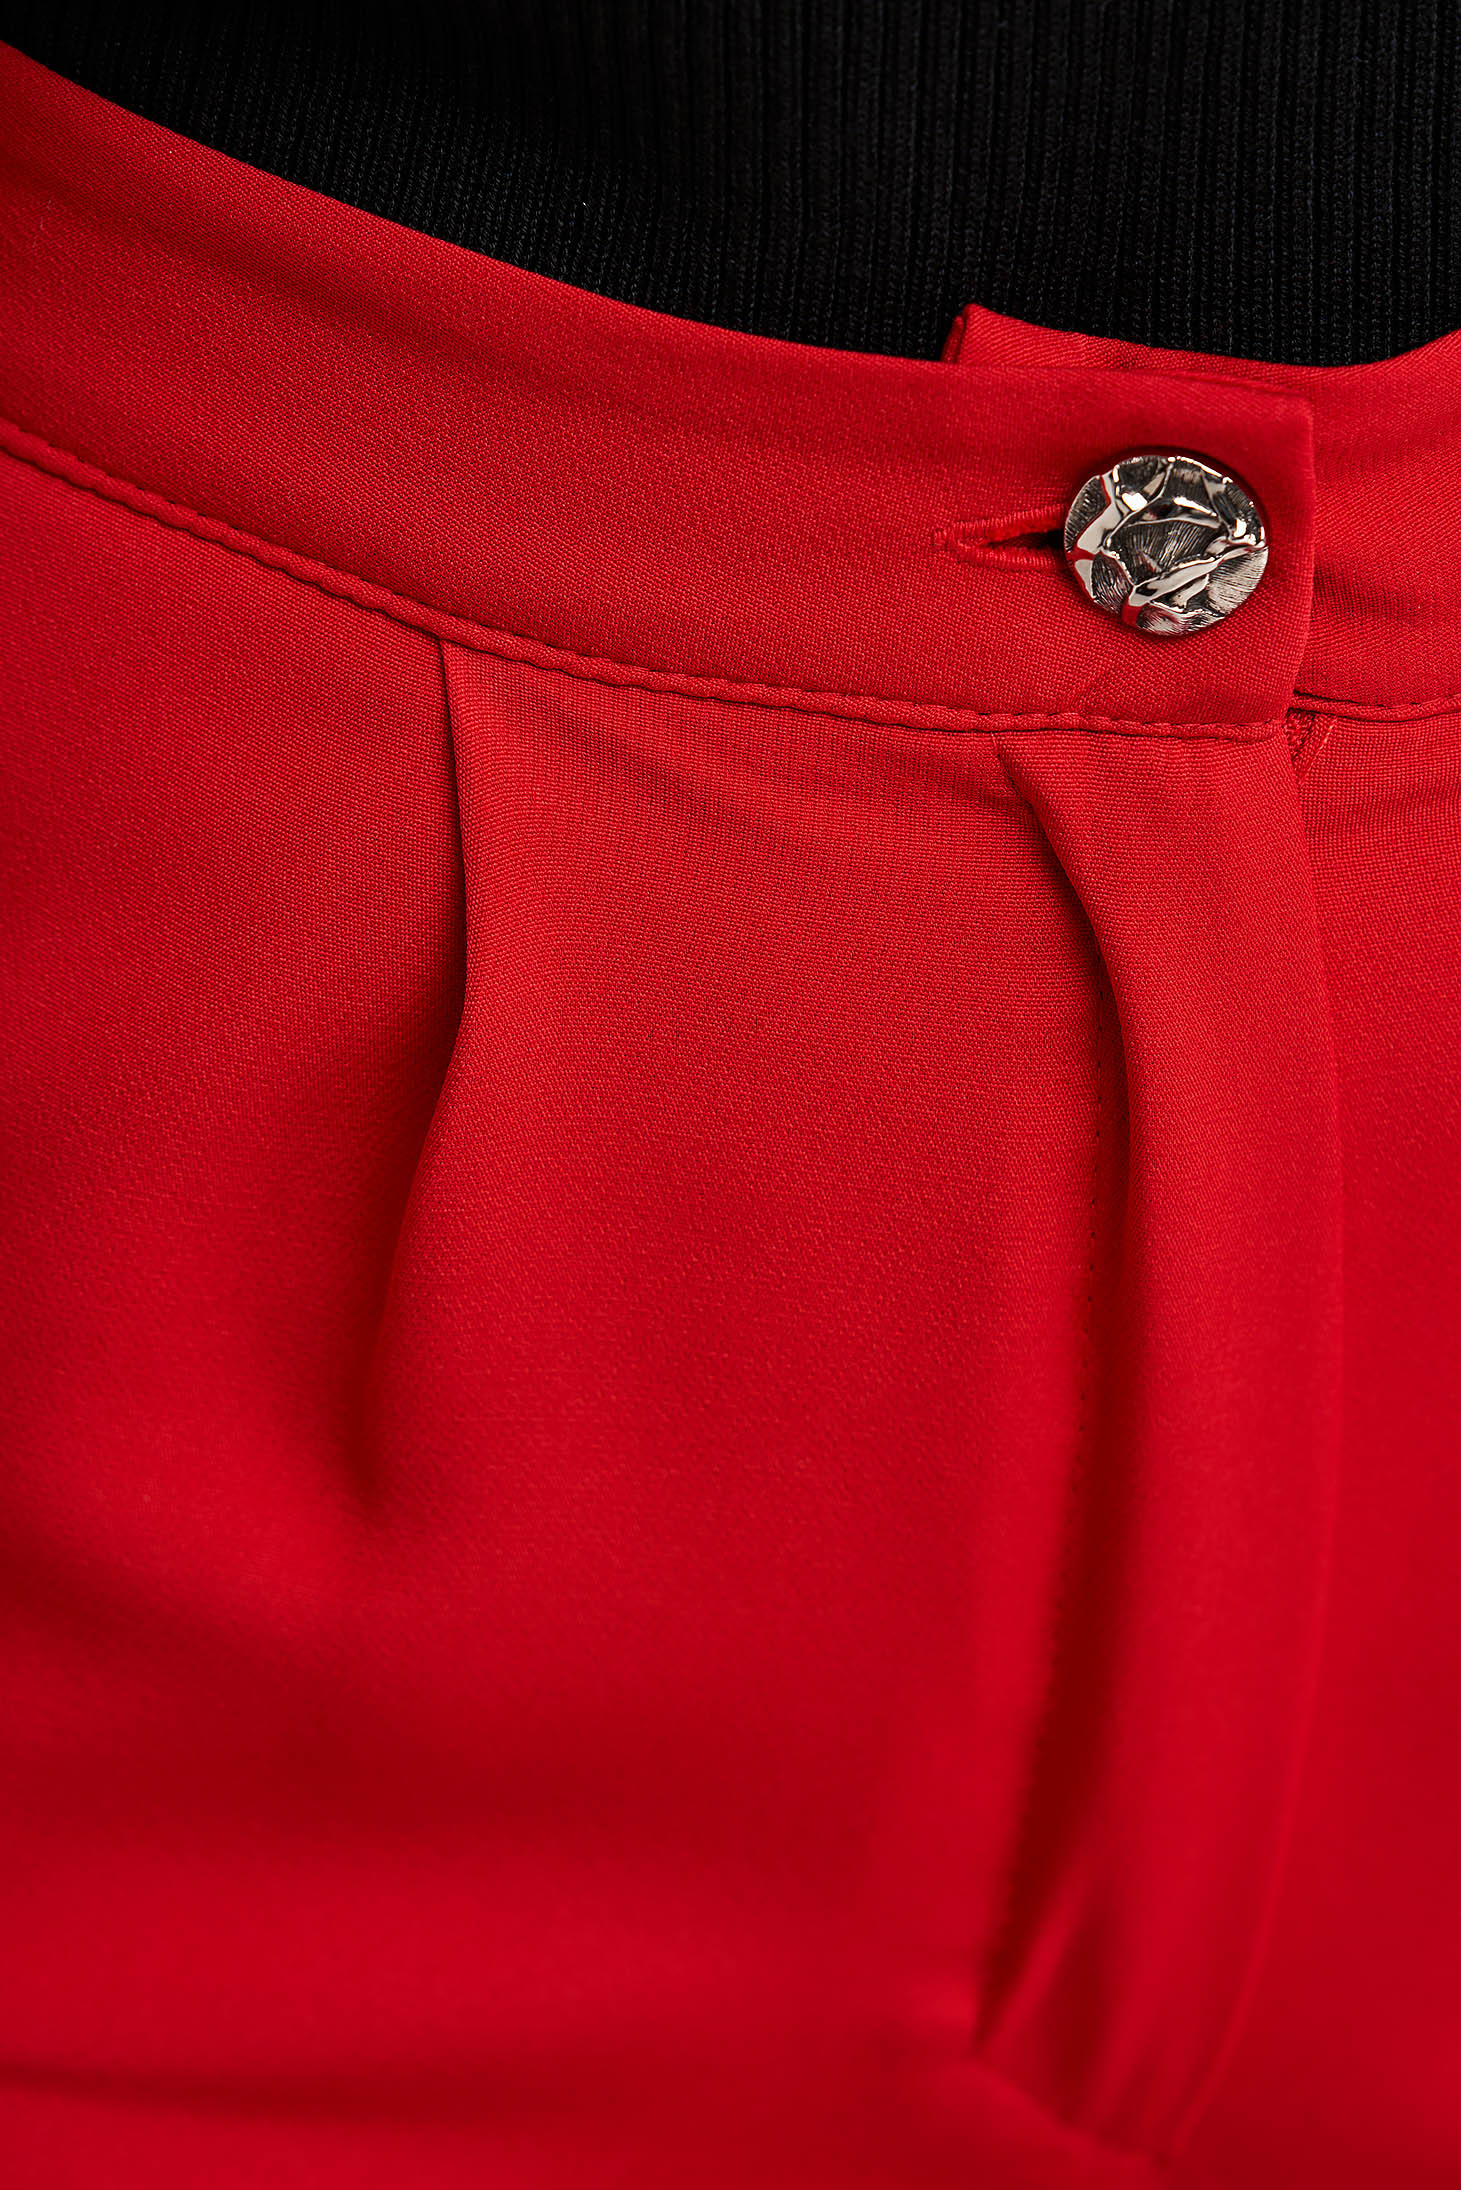 Pantaloni din stofa elastica rosii conici cu talie normala si buzunare laterale - StarShinerS 6 - StarShinerS.ro